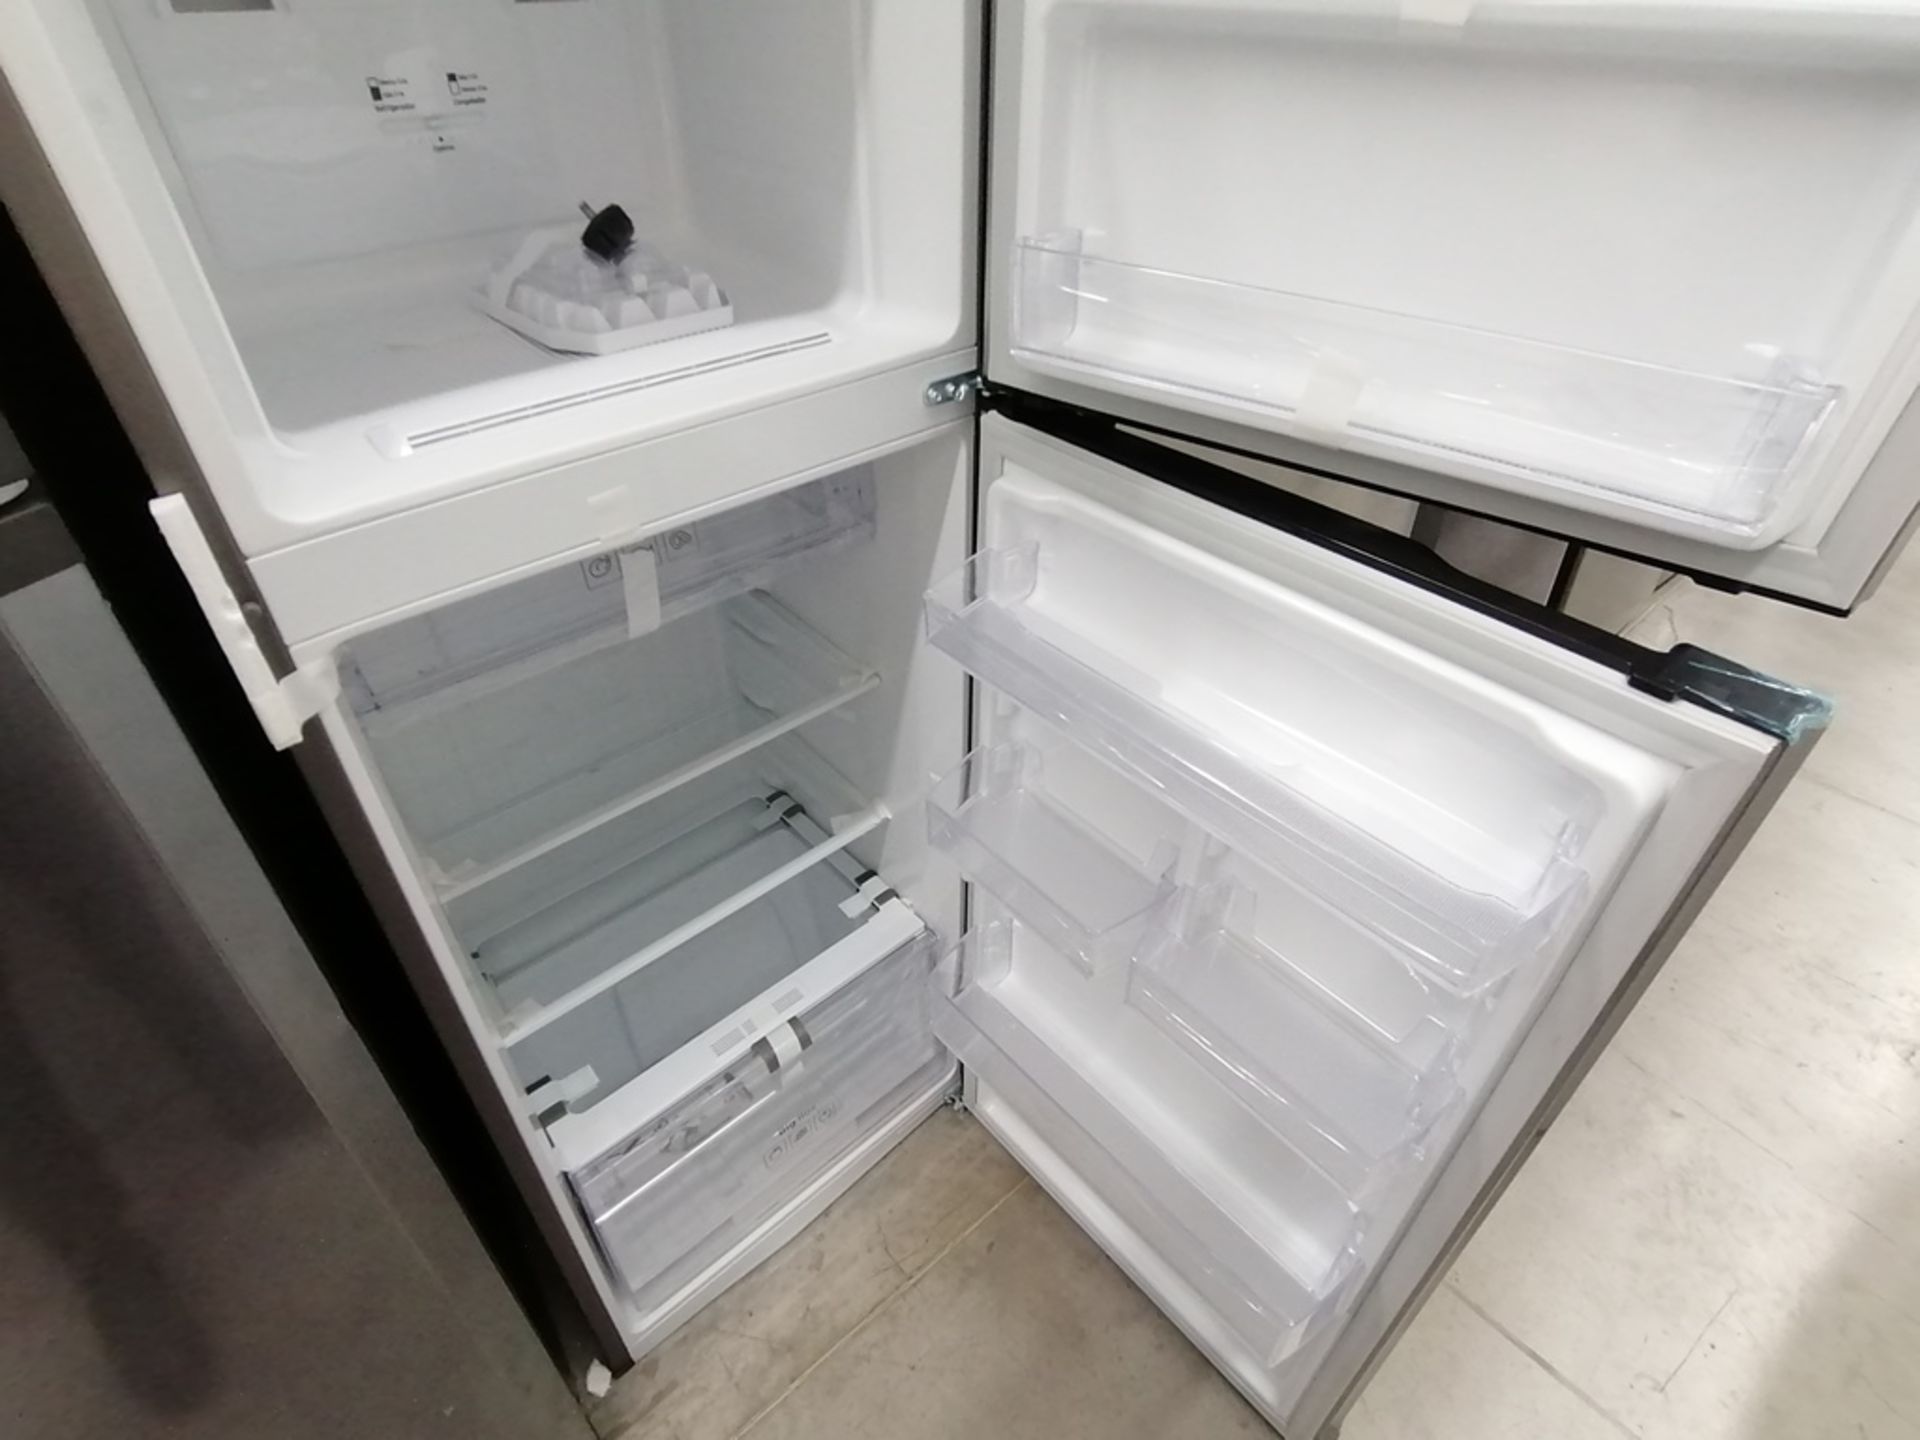 Lote de 2 refrigeradores incluye: 1 Refrigerador, Marca Samsung, Modelo RT29K500JS8, Serie 0AZS4BAR - Image 12 of 15